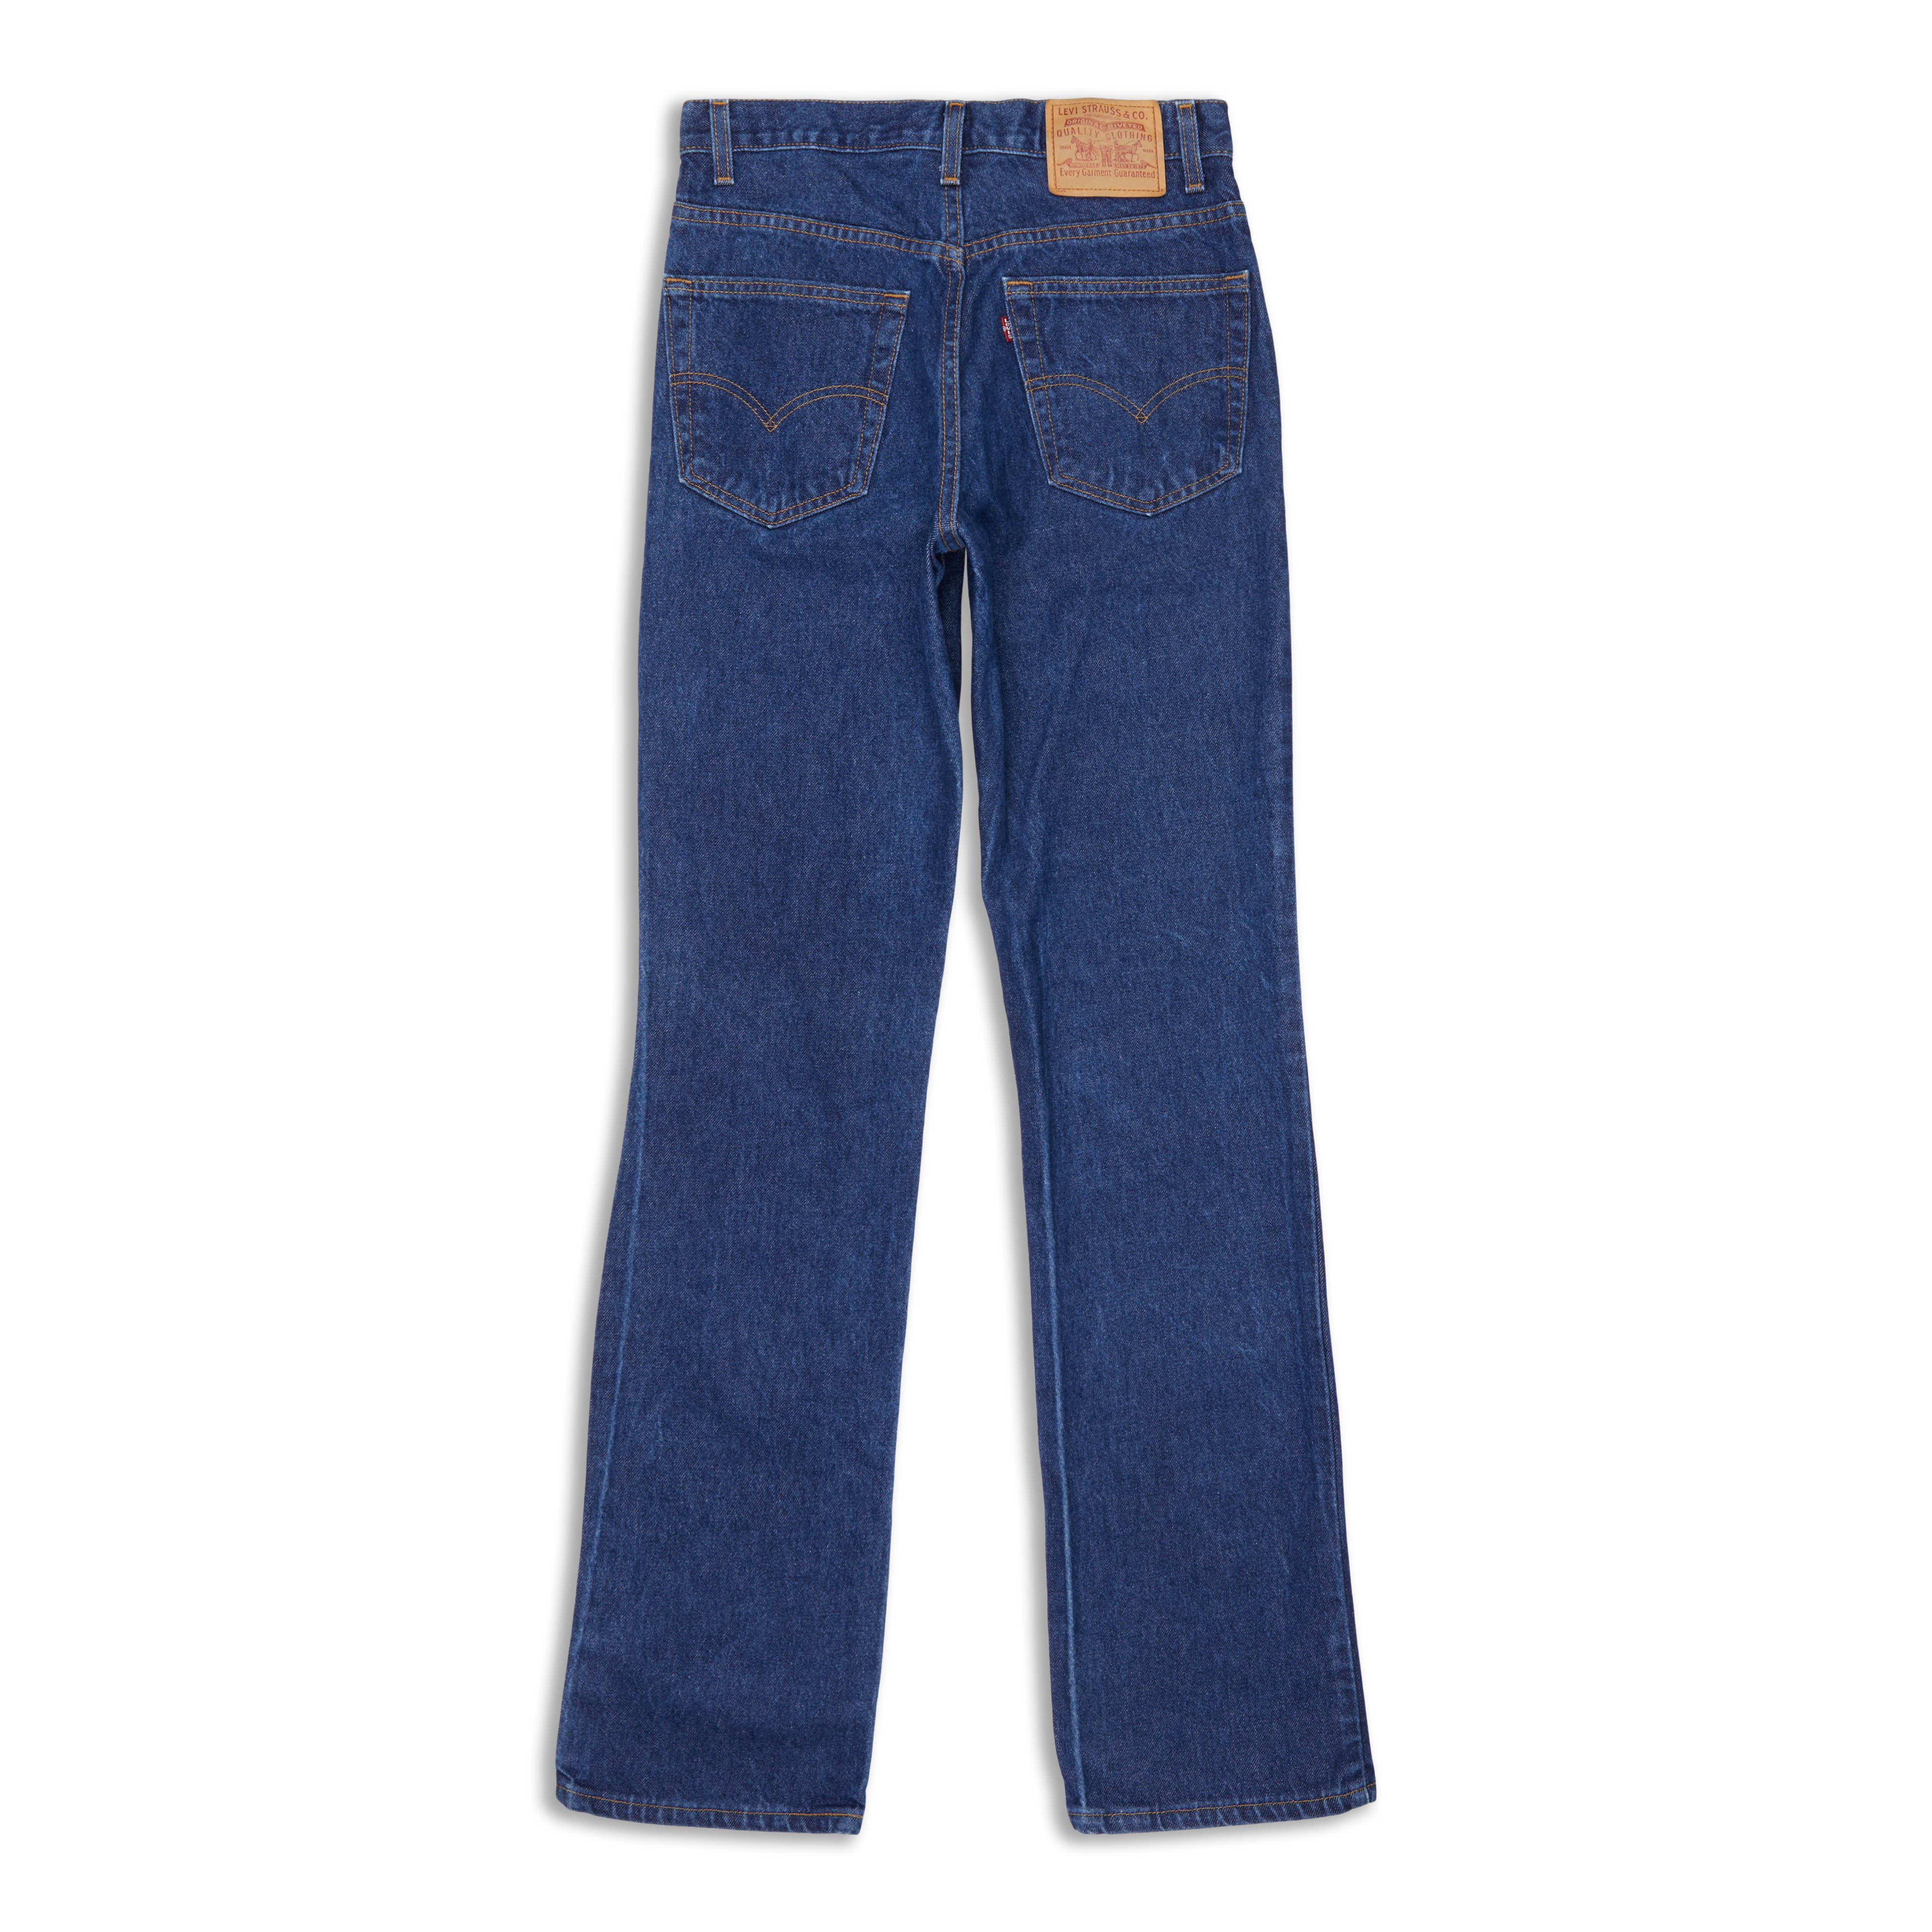 Levis Vintage 517™ Boot Cut Jeans Dark Wash